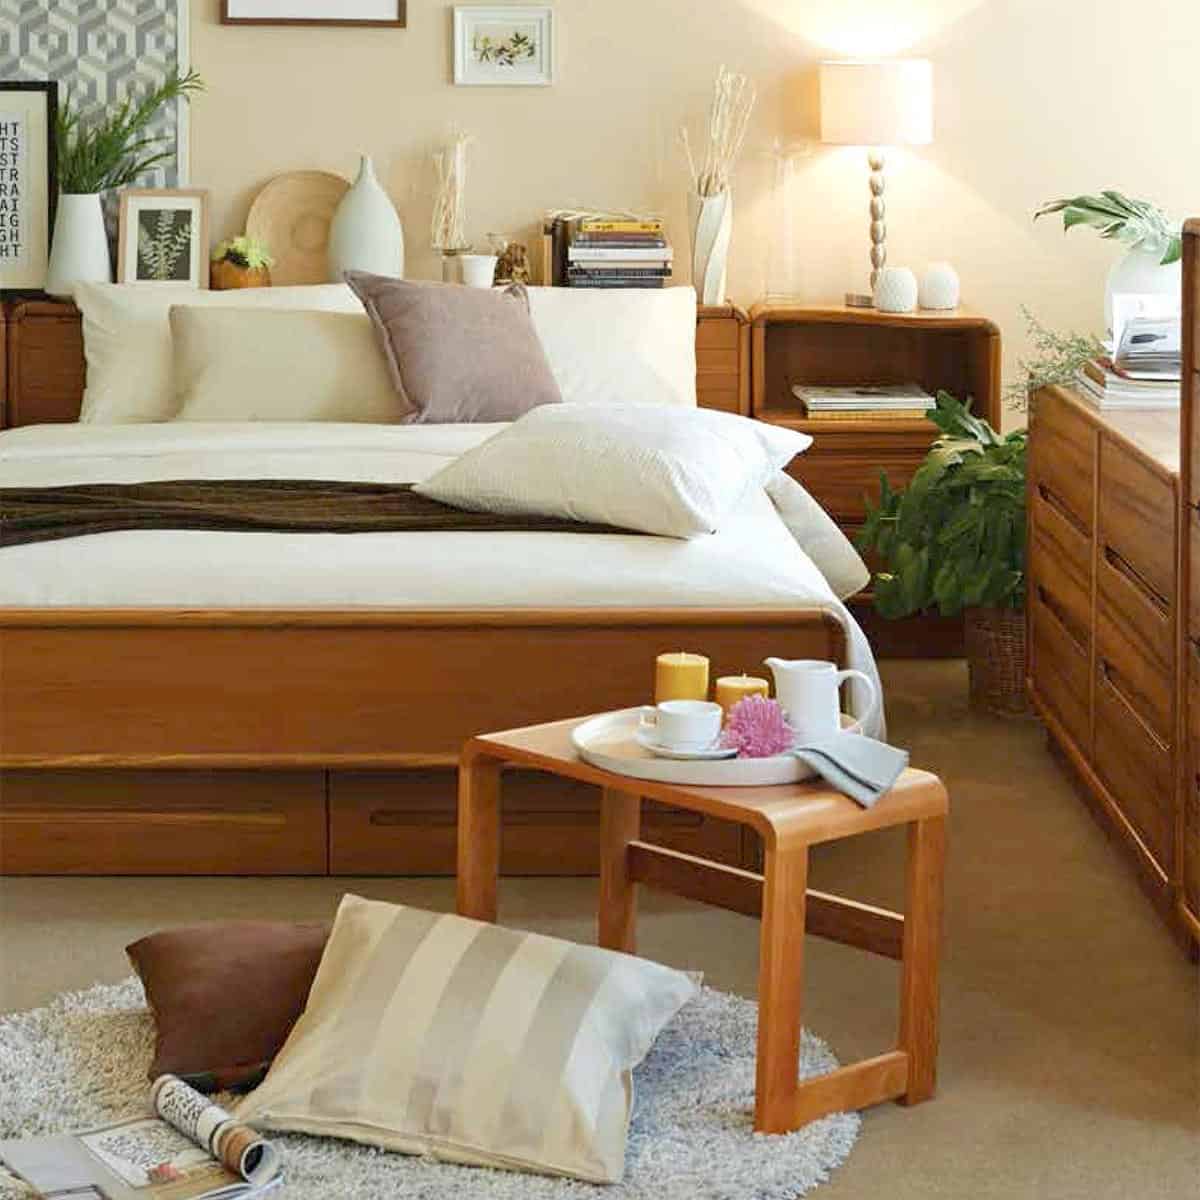 https://www.houseofdenmarkfurniture.com/wp-content/uploads/2015/12/sun-8100-bedroom-in-room-setting_1.jpg